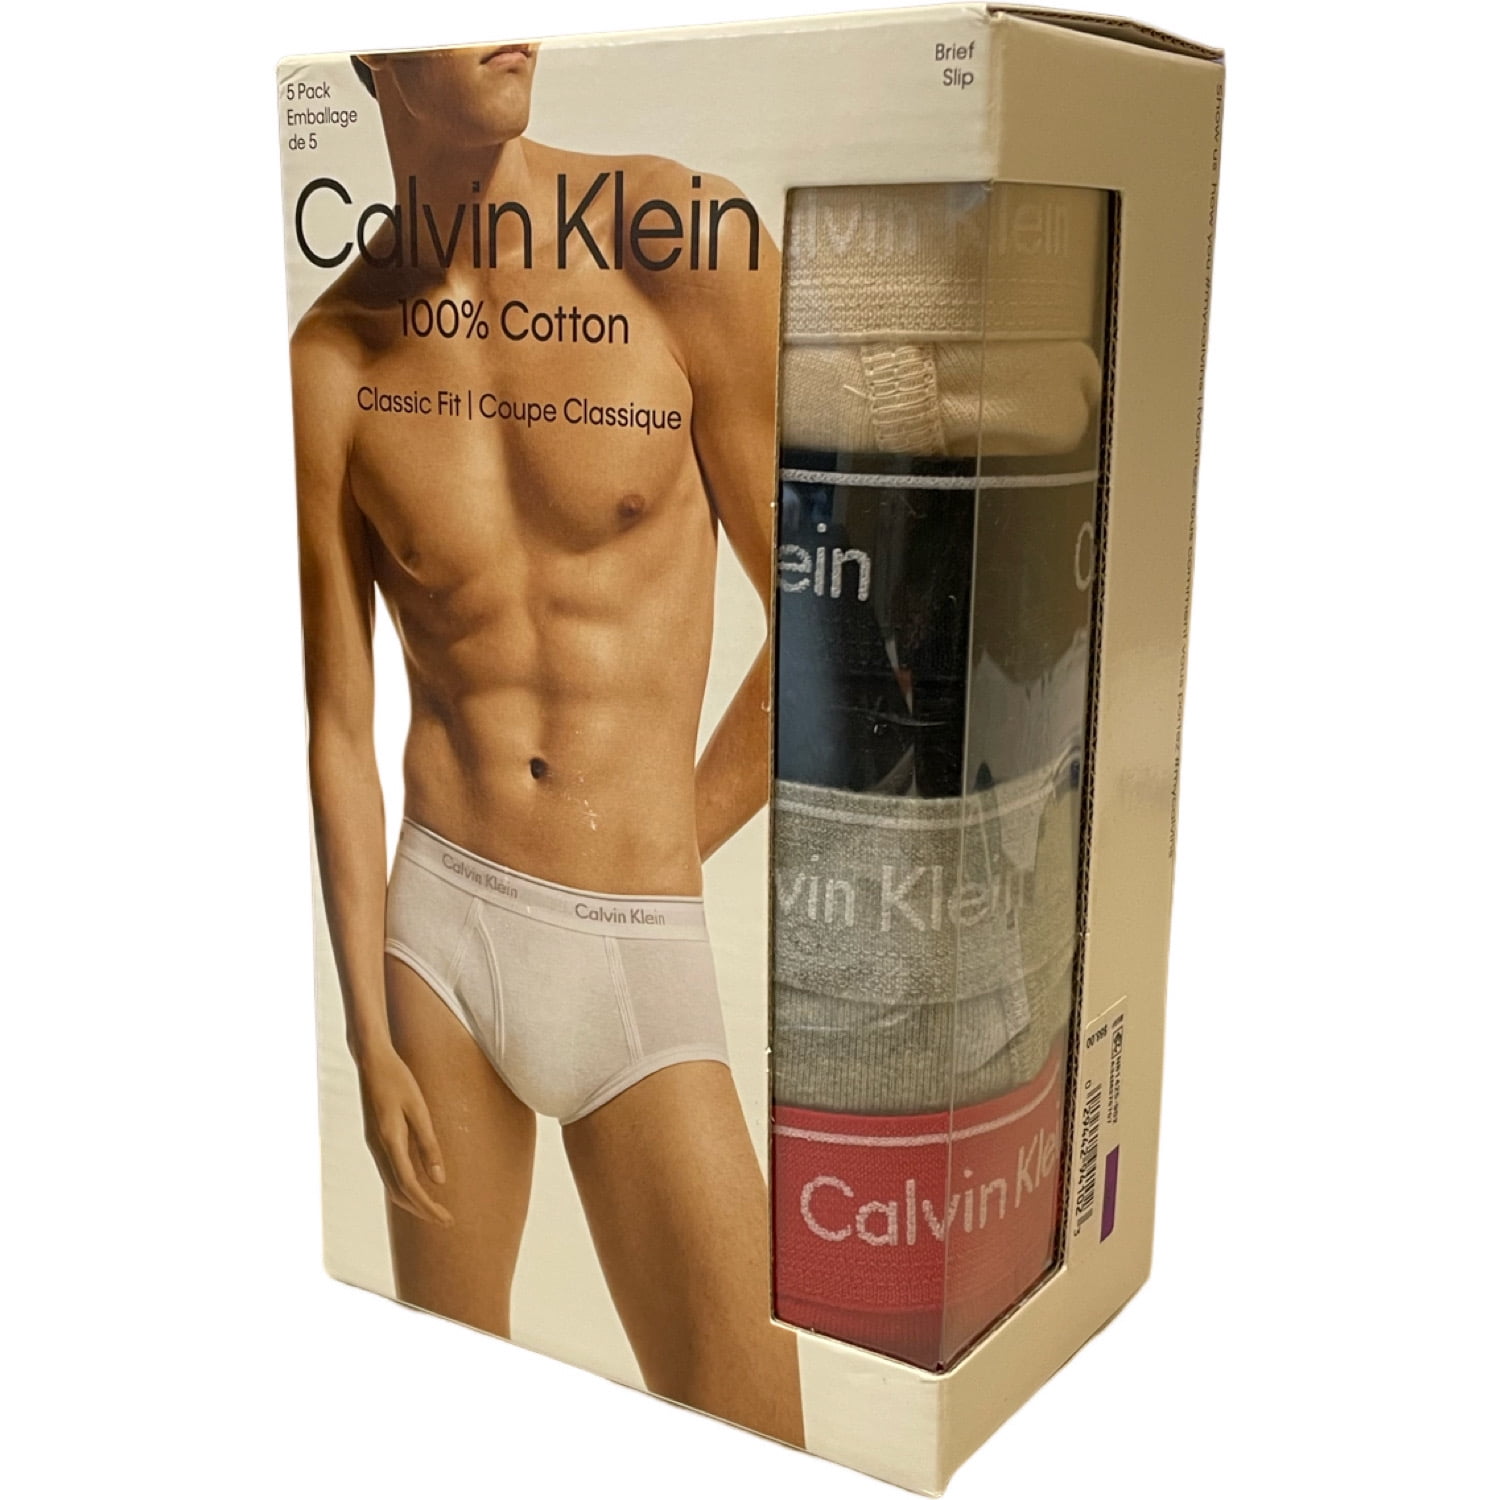 NEW Calvin Klein Men 5 Pack Hip Brief 100% Cotton Classic Fit 2XL/XXL  Assorted Light Beige//Army Green NB1425-902 